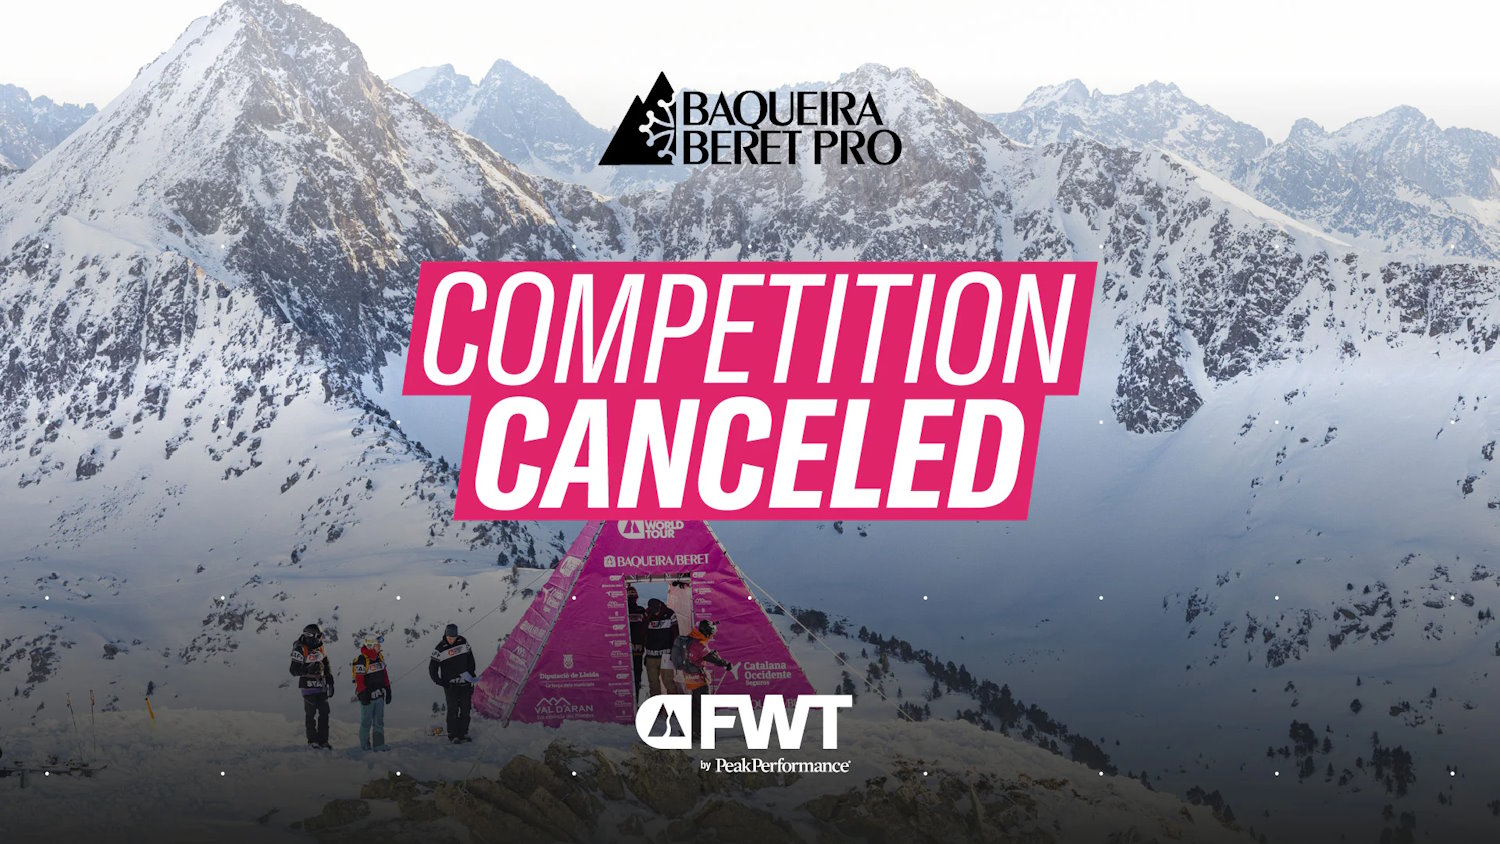 Se cancela el FWT Baqueira Beret Pro debido a las condiciones de nieve en el Baciver